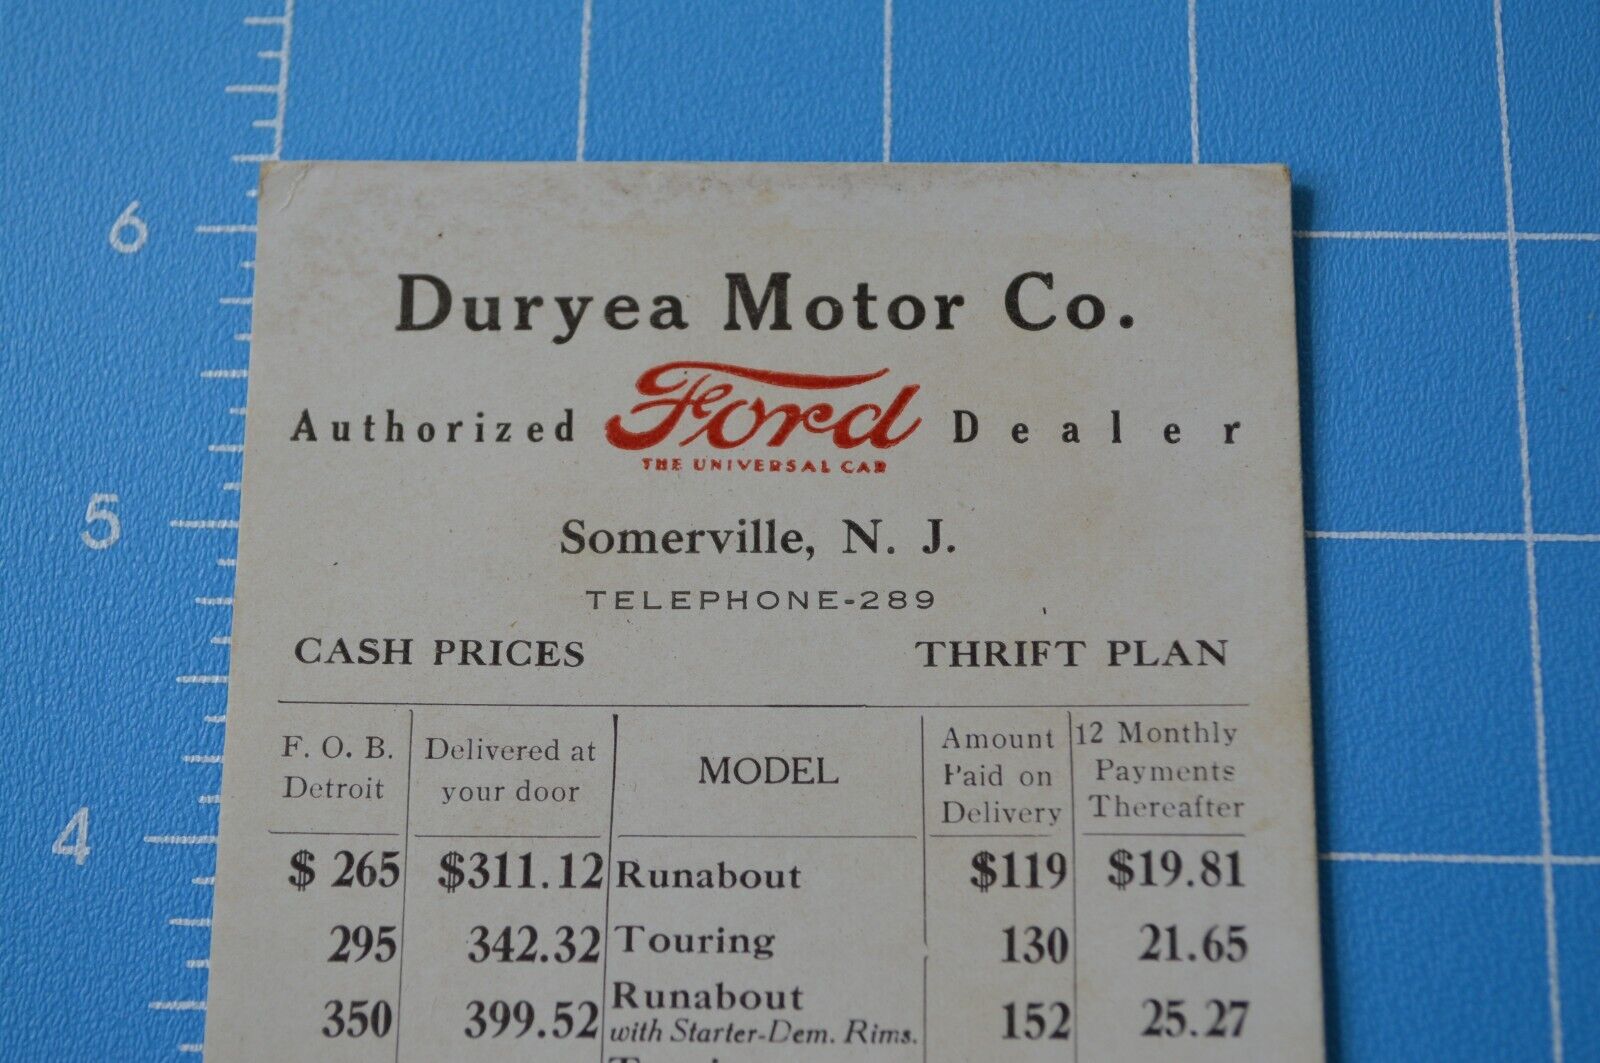 Duryea Motor Co. Ford Dealer Somerville NJ Blotter w/ Prices for Various Models